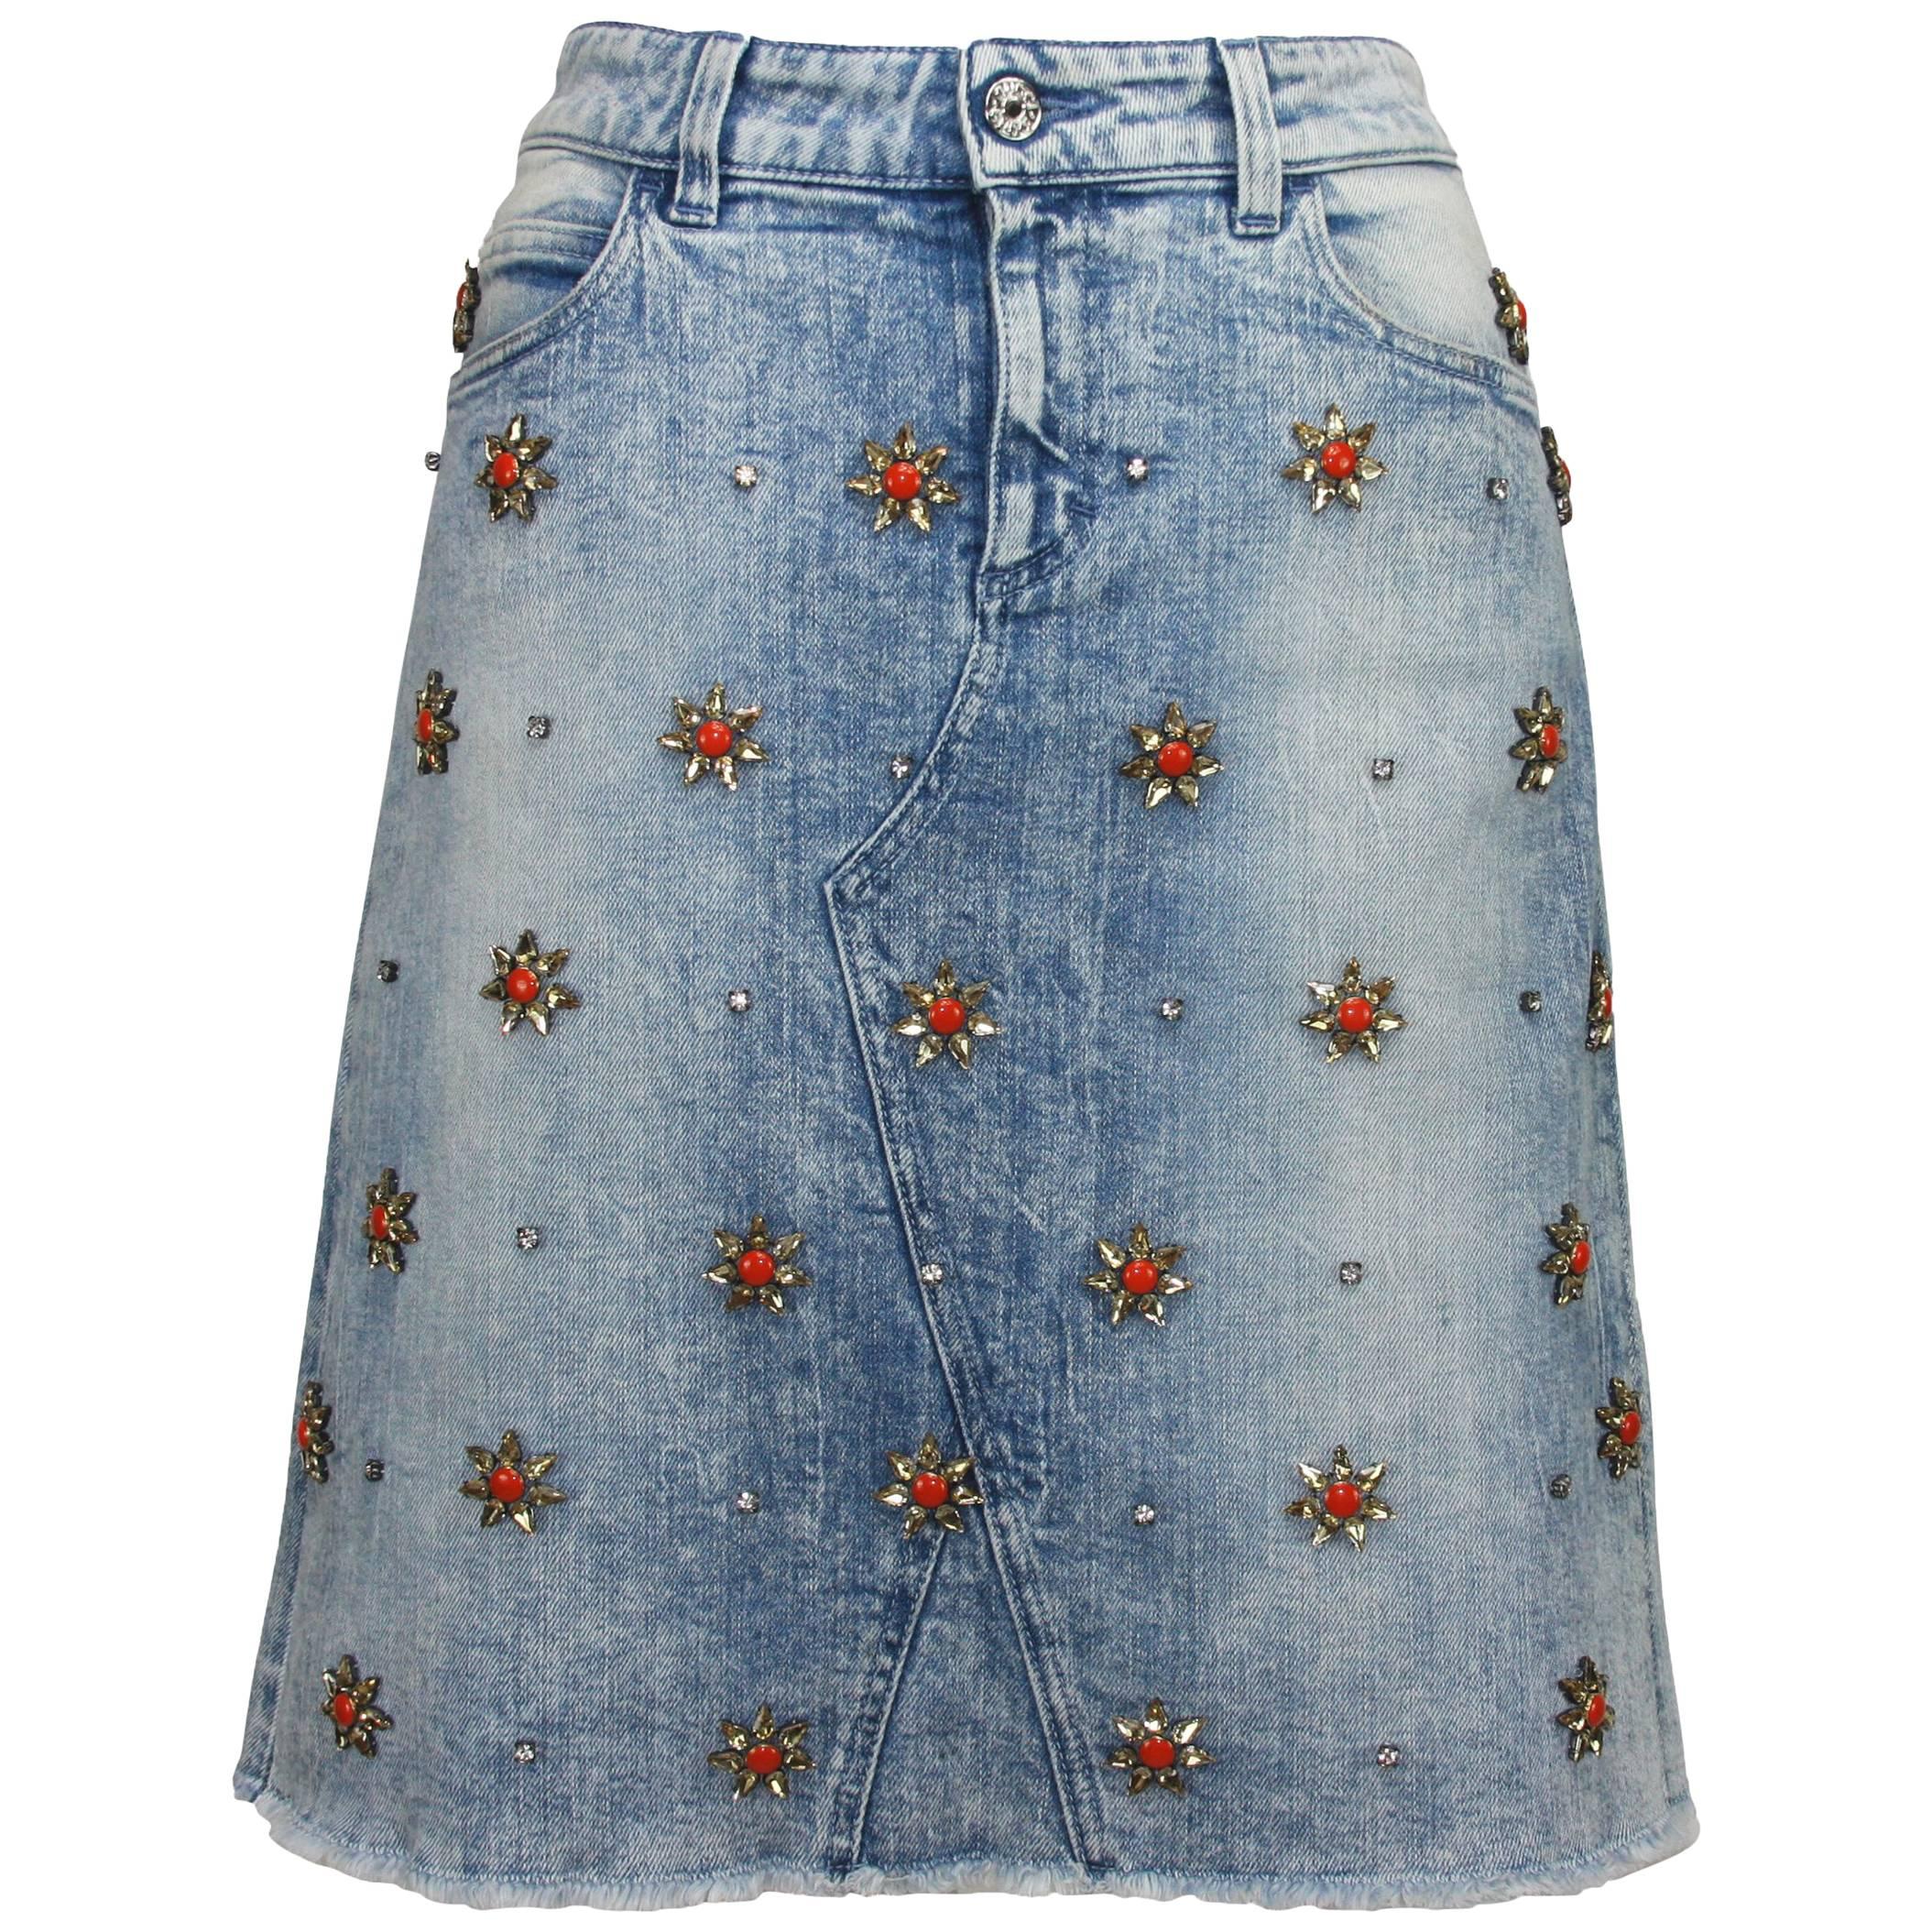 GUCCI Crystal-Embellished Stretch Denim Skirt Recreated After 1999 size 40 - 4 For Sale